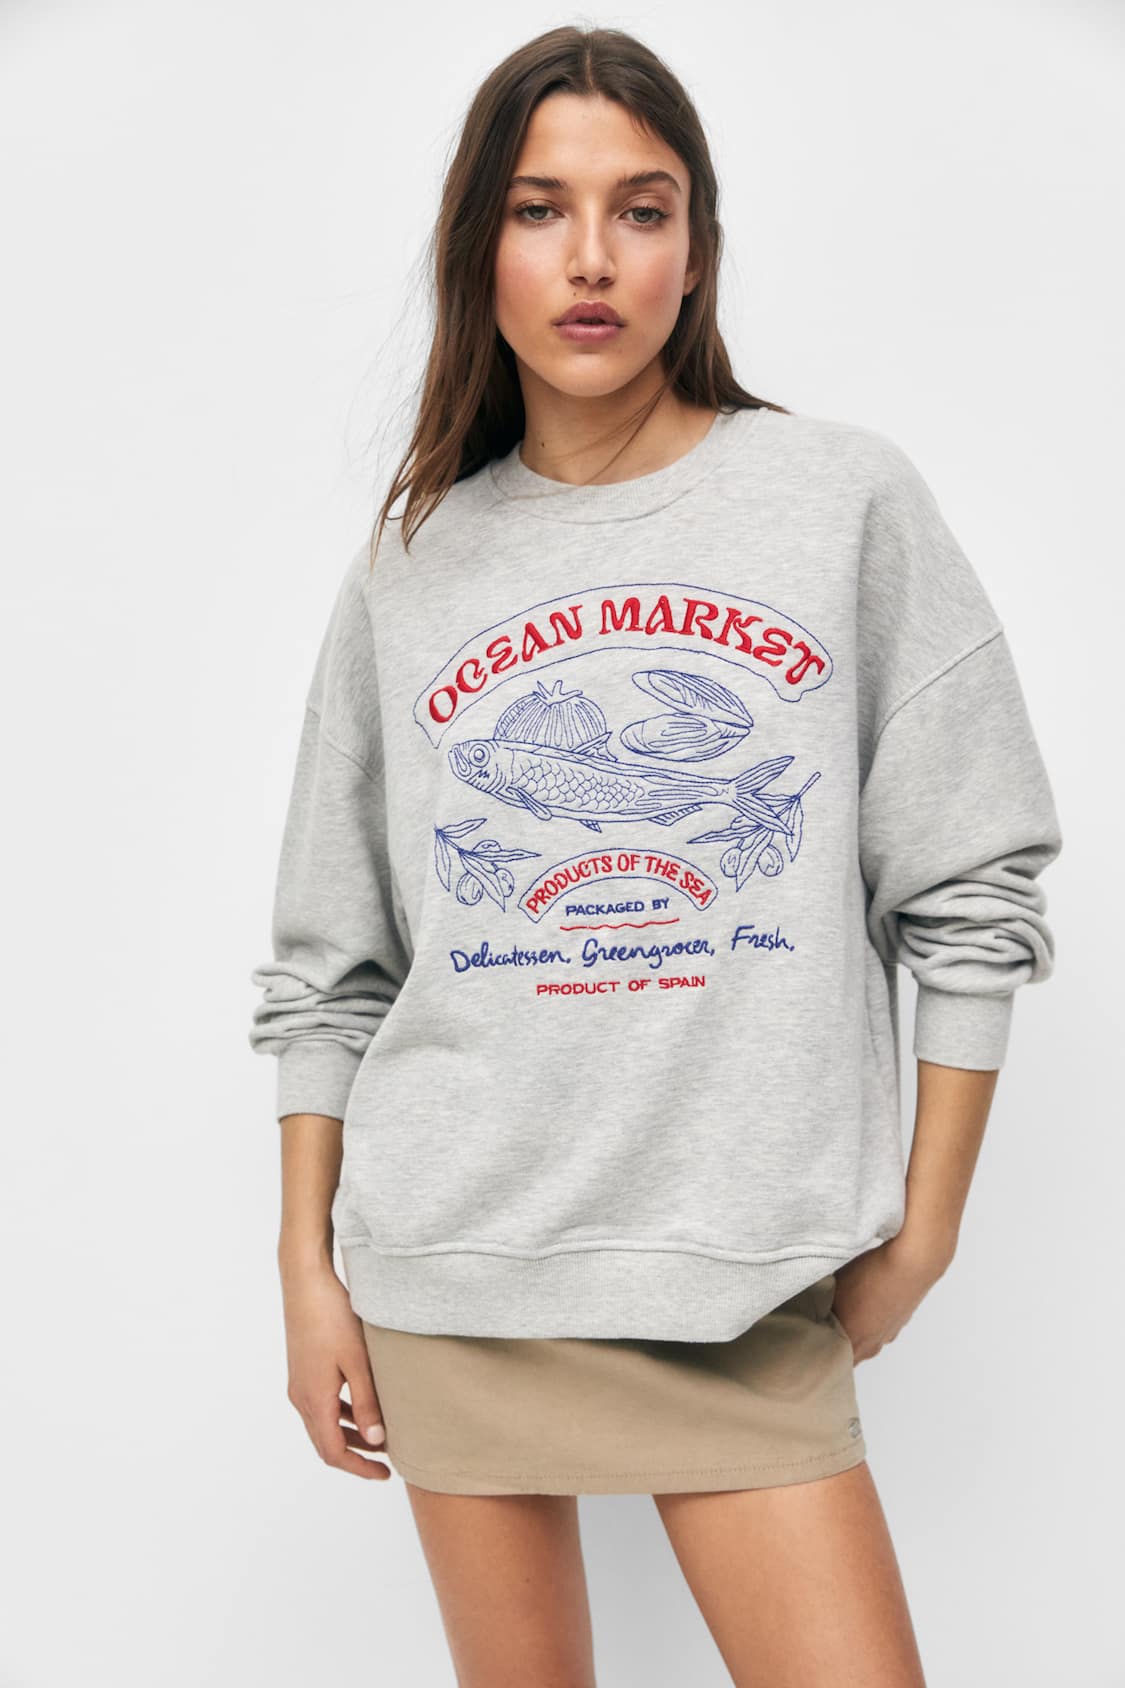 Pull&Bear Women's Embroidered Sweatshirt